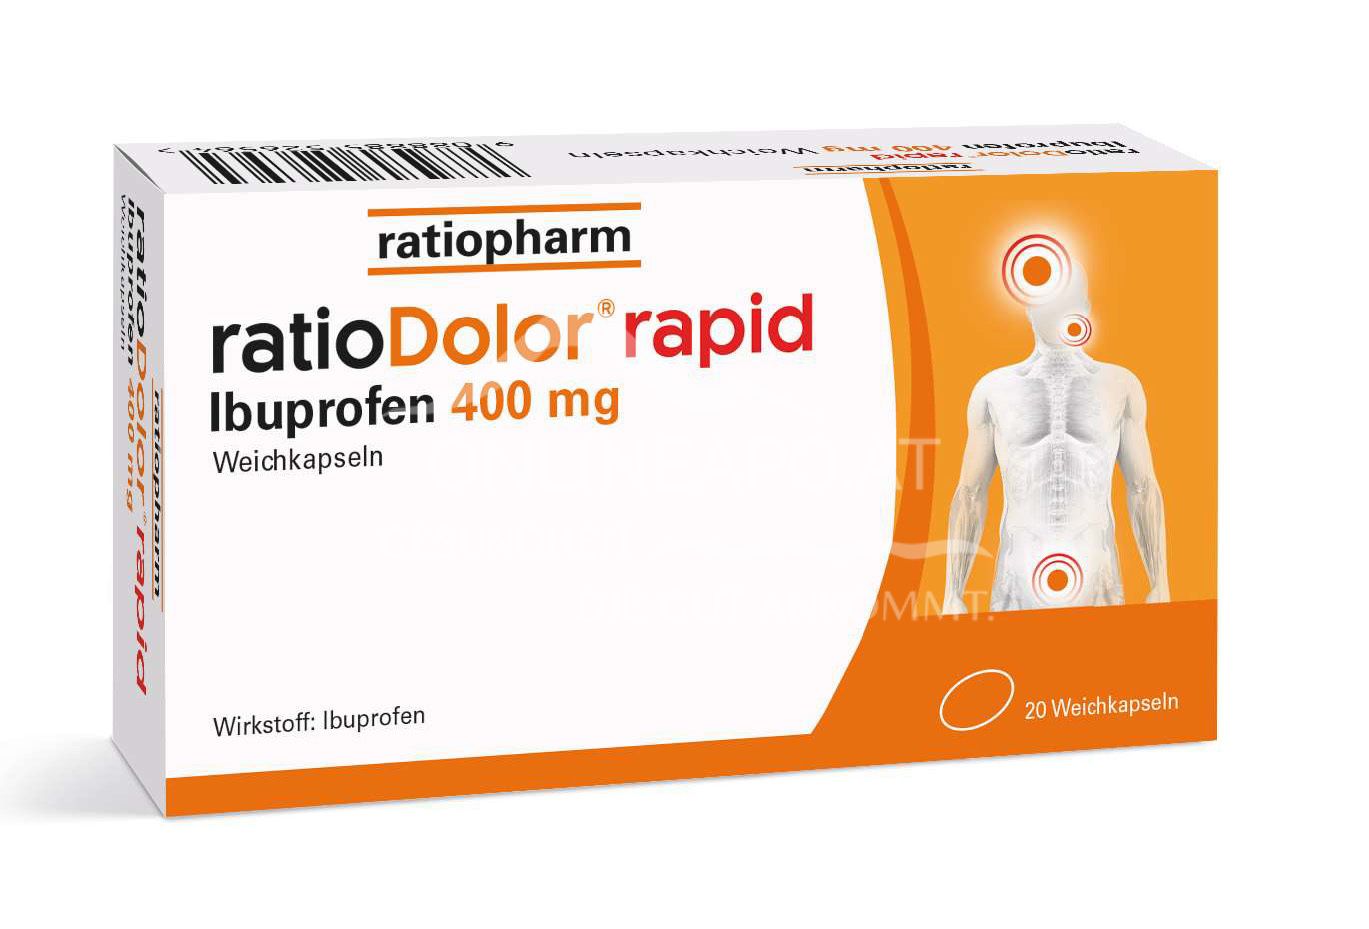 ratioDolor® rapid Ibuprofen 400 mg Weichkapseln